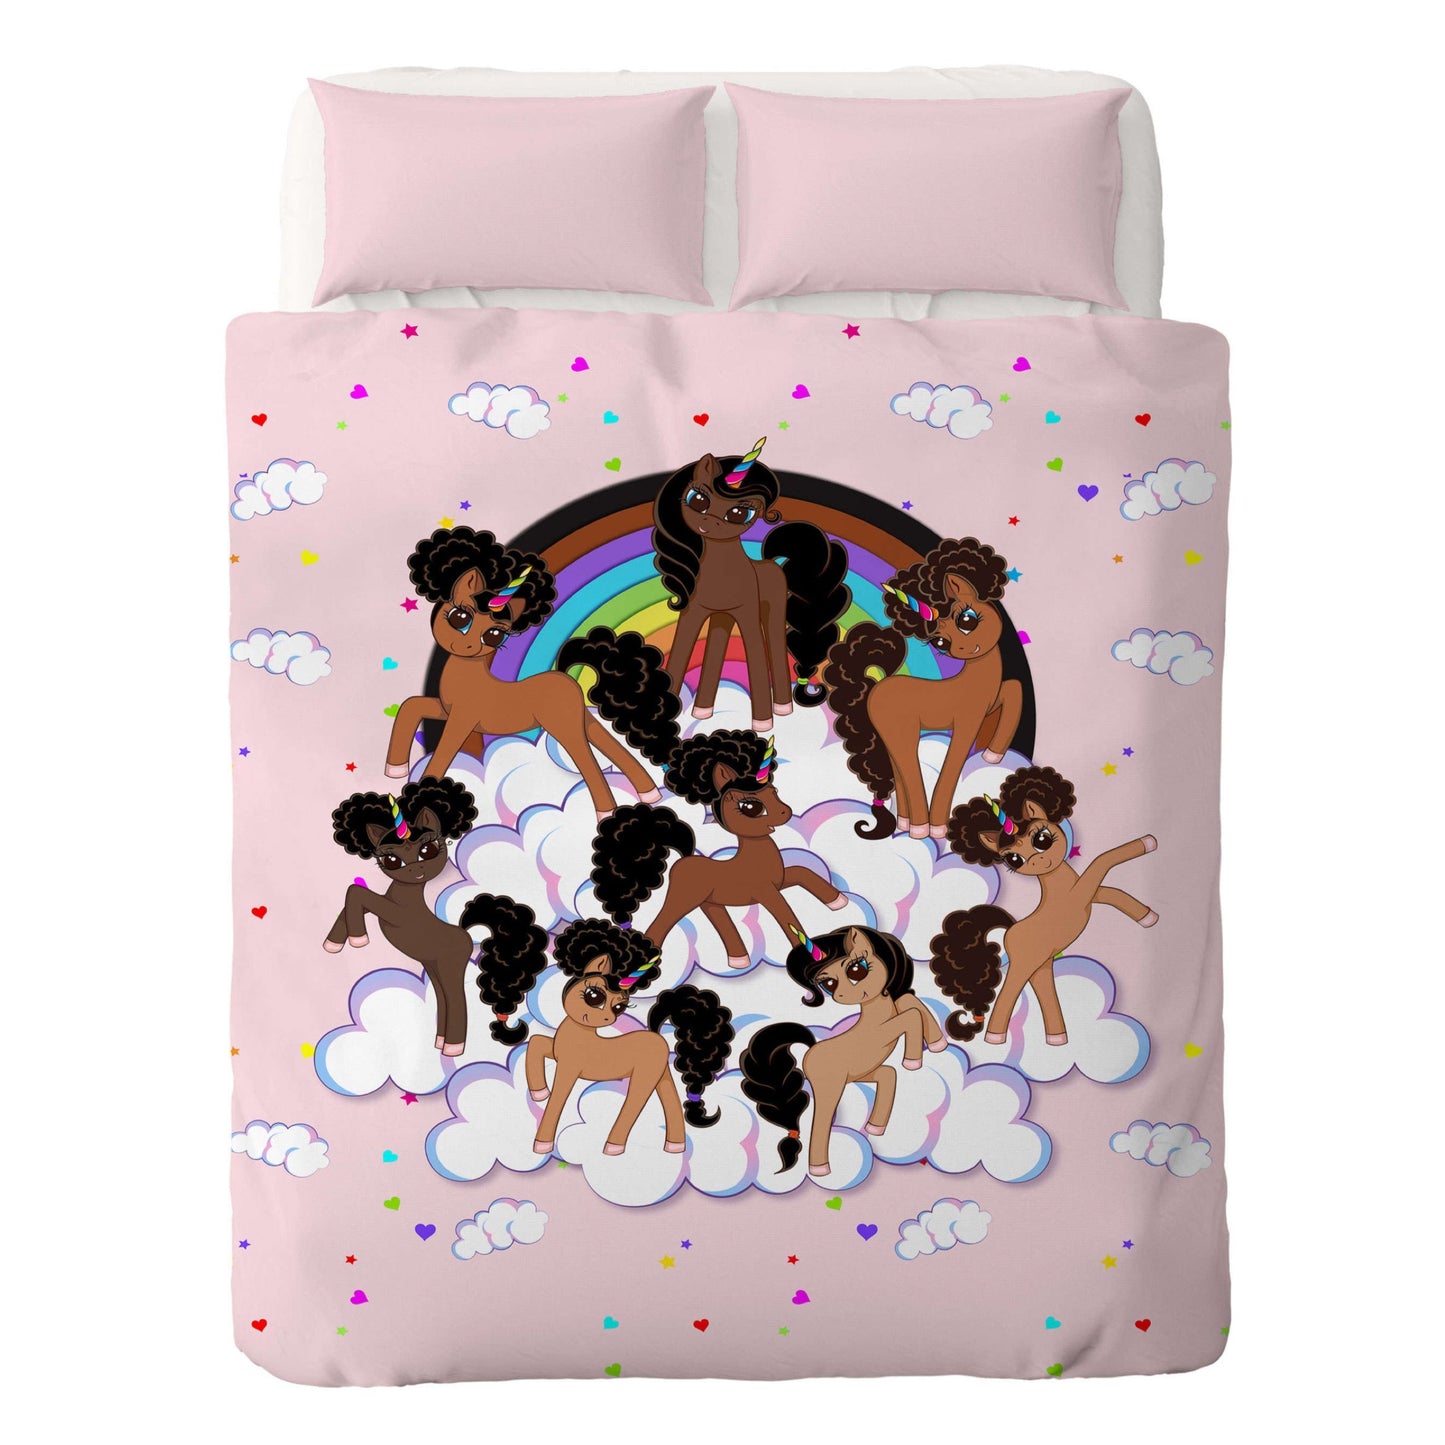 Chocolate Rainbows Cloud 9 Oversized Plush Blanket -  Petal Pink